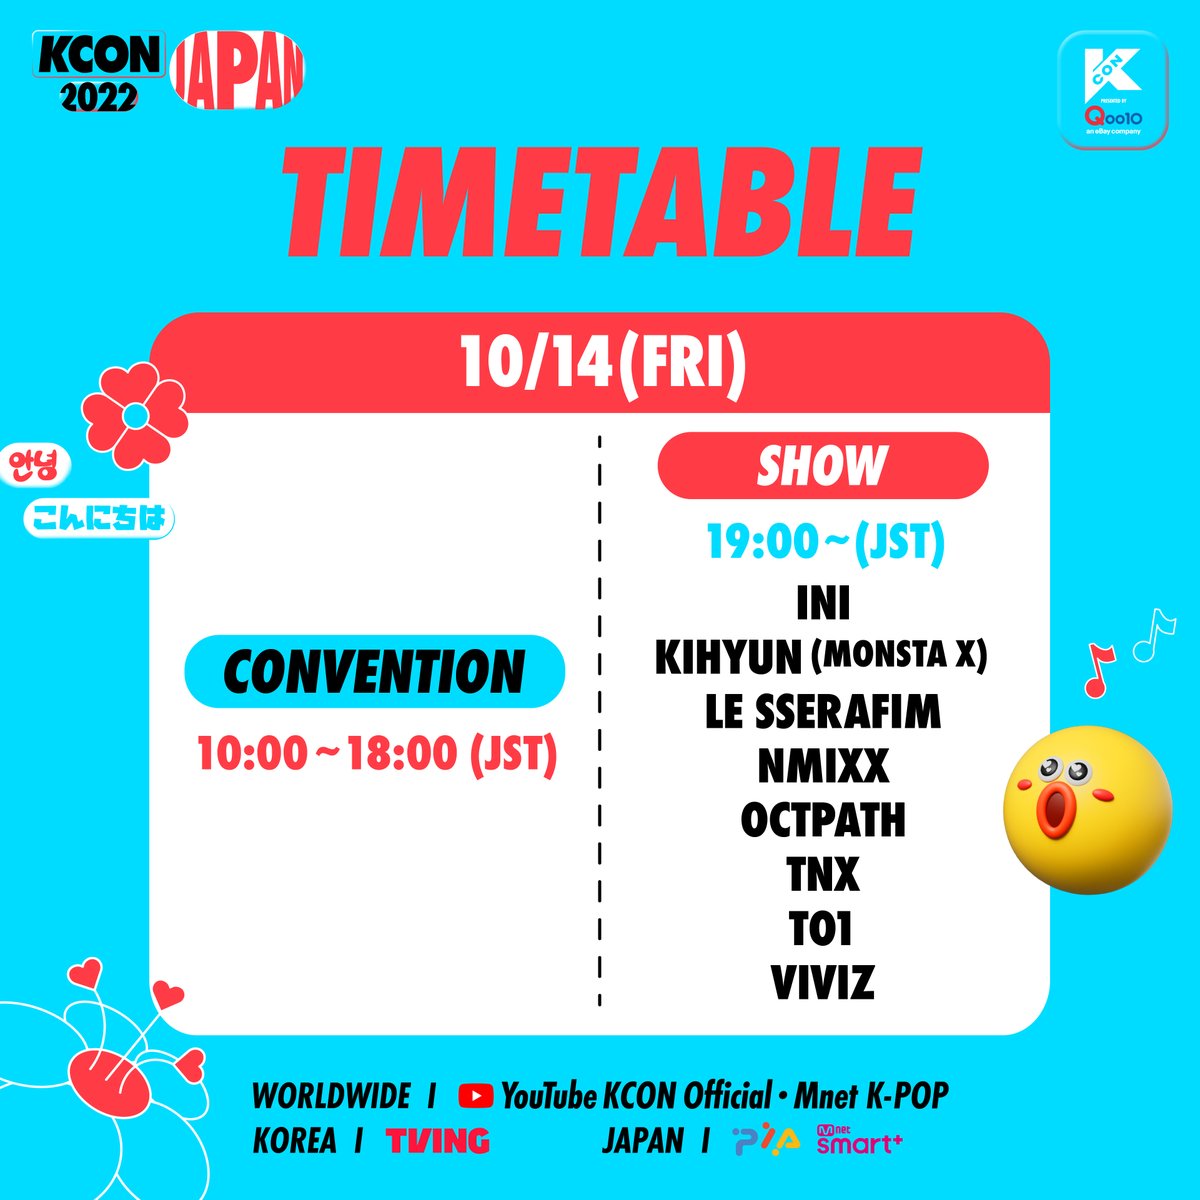 ❤️KCON 2022 JAPAN TIMETABLE DAY 1💙 10/14(JST) TIMETABLEをご確認ください😊 Let's KCON! ✔️このタイムテーブルは現場事情によって変更される可能性があります。 #KCON #KCONJAPAN #KCON2022JAPAN